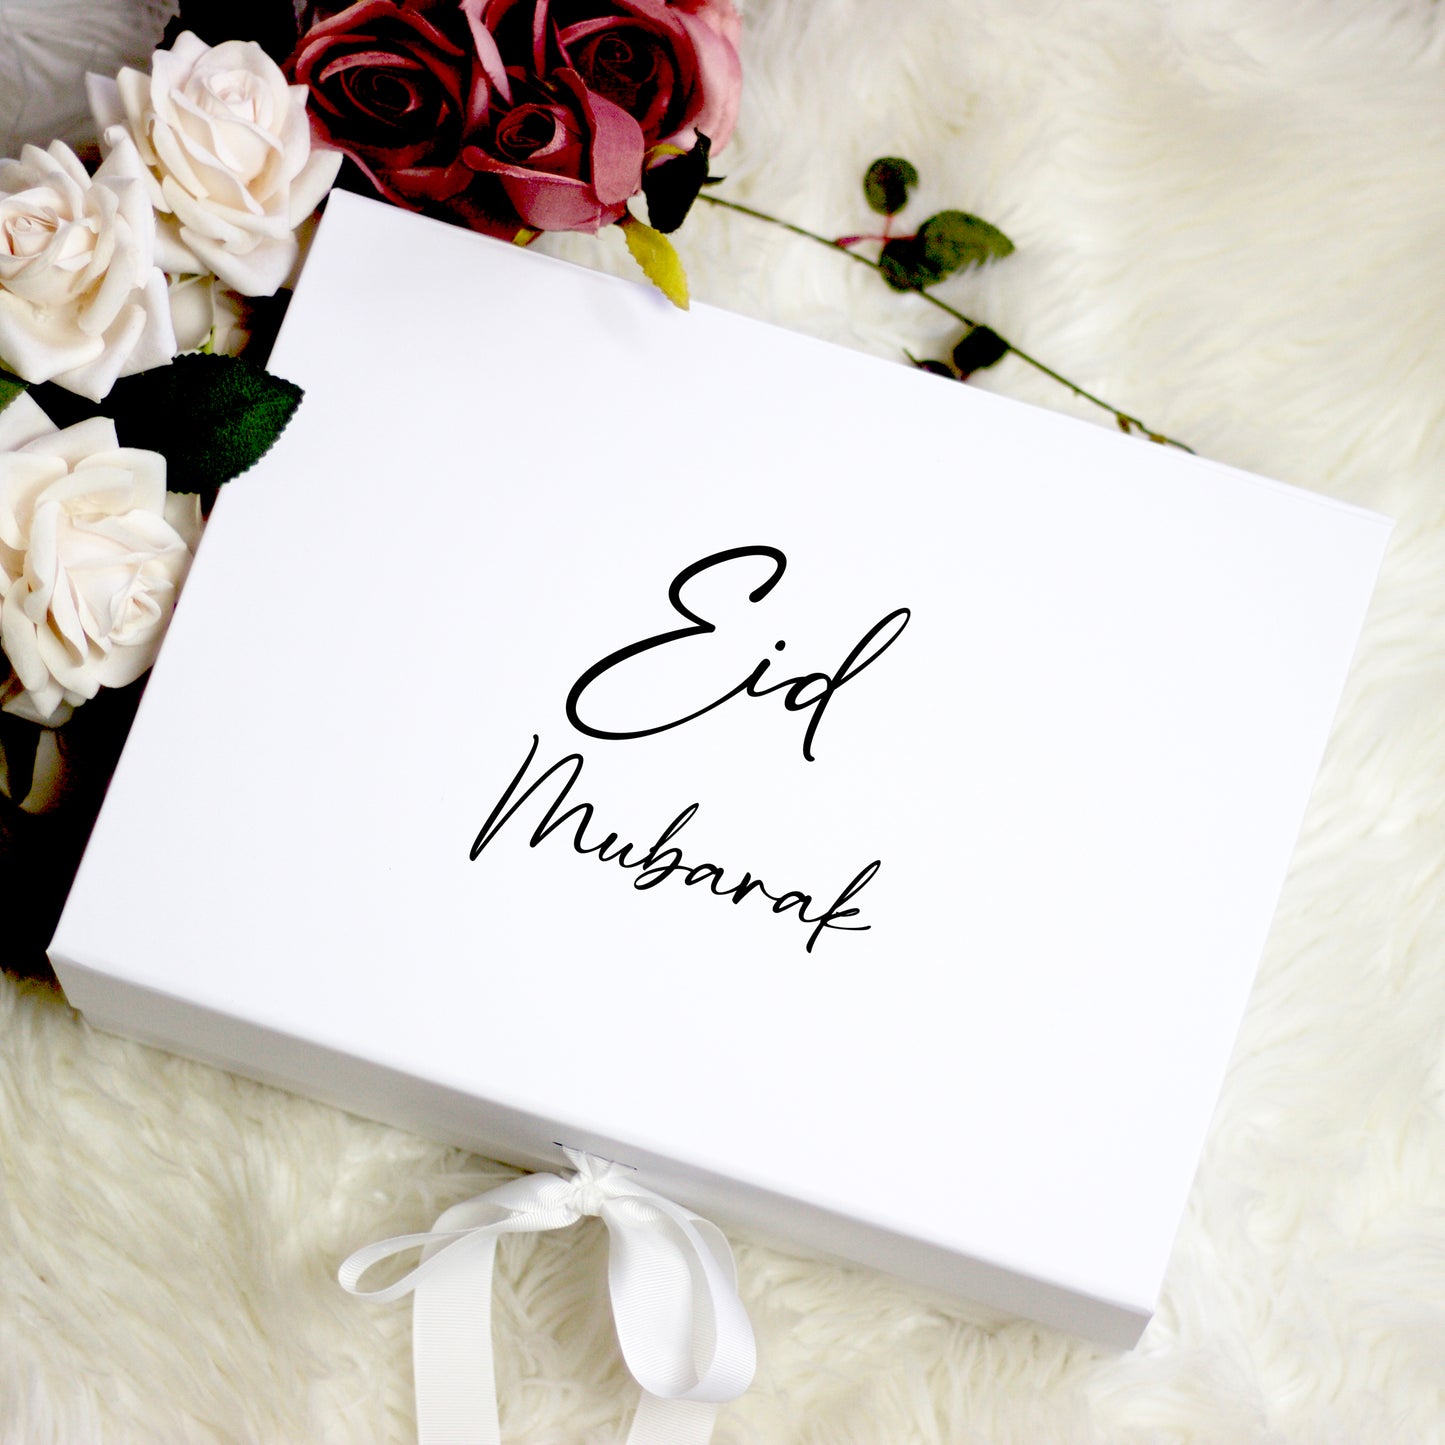 The "Eid Mubarak" Gift Box